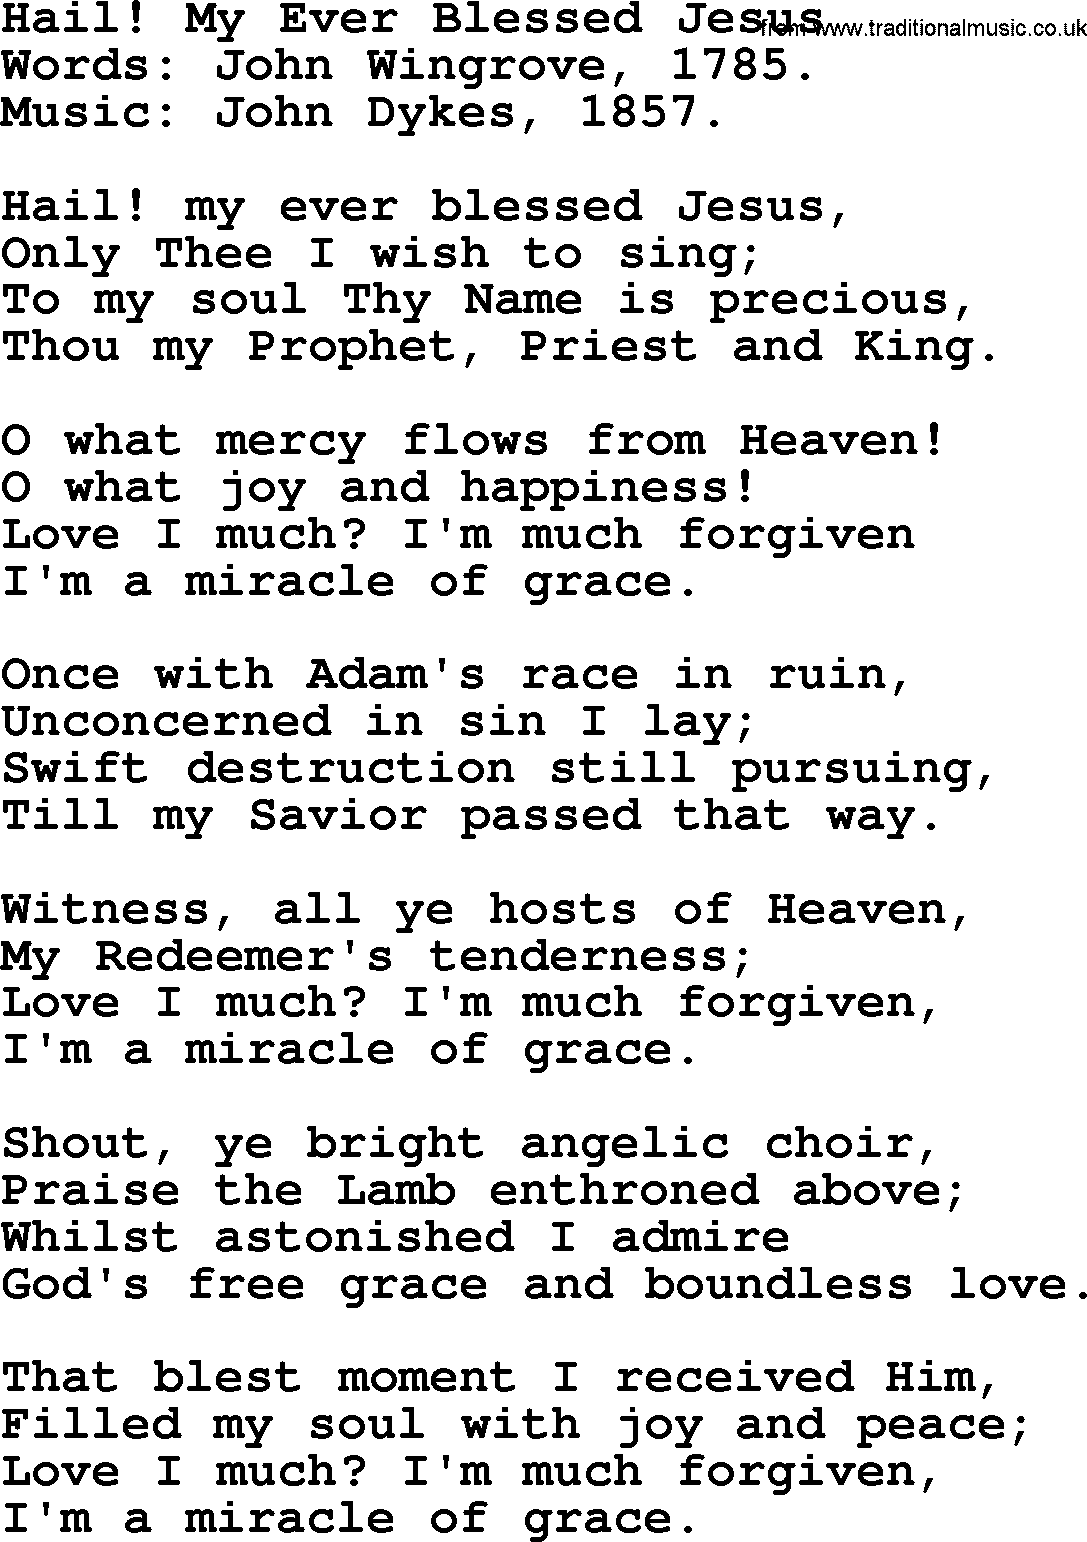 Forgiveness hymns, Hymn: Hail! My Ever Blessed Jesus, lyrics with PDF